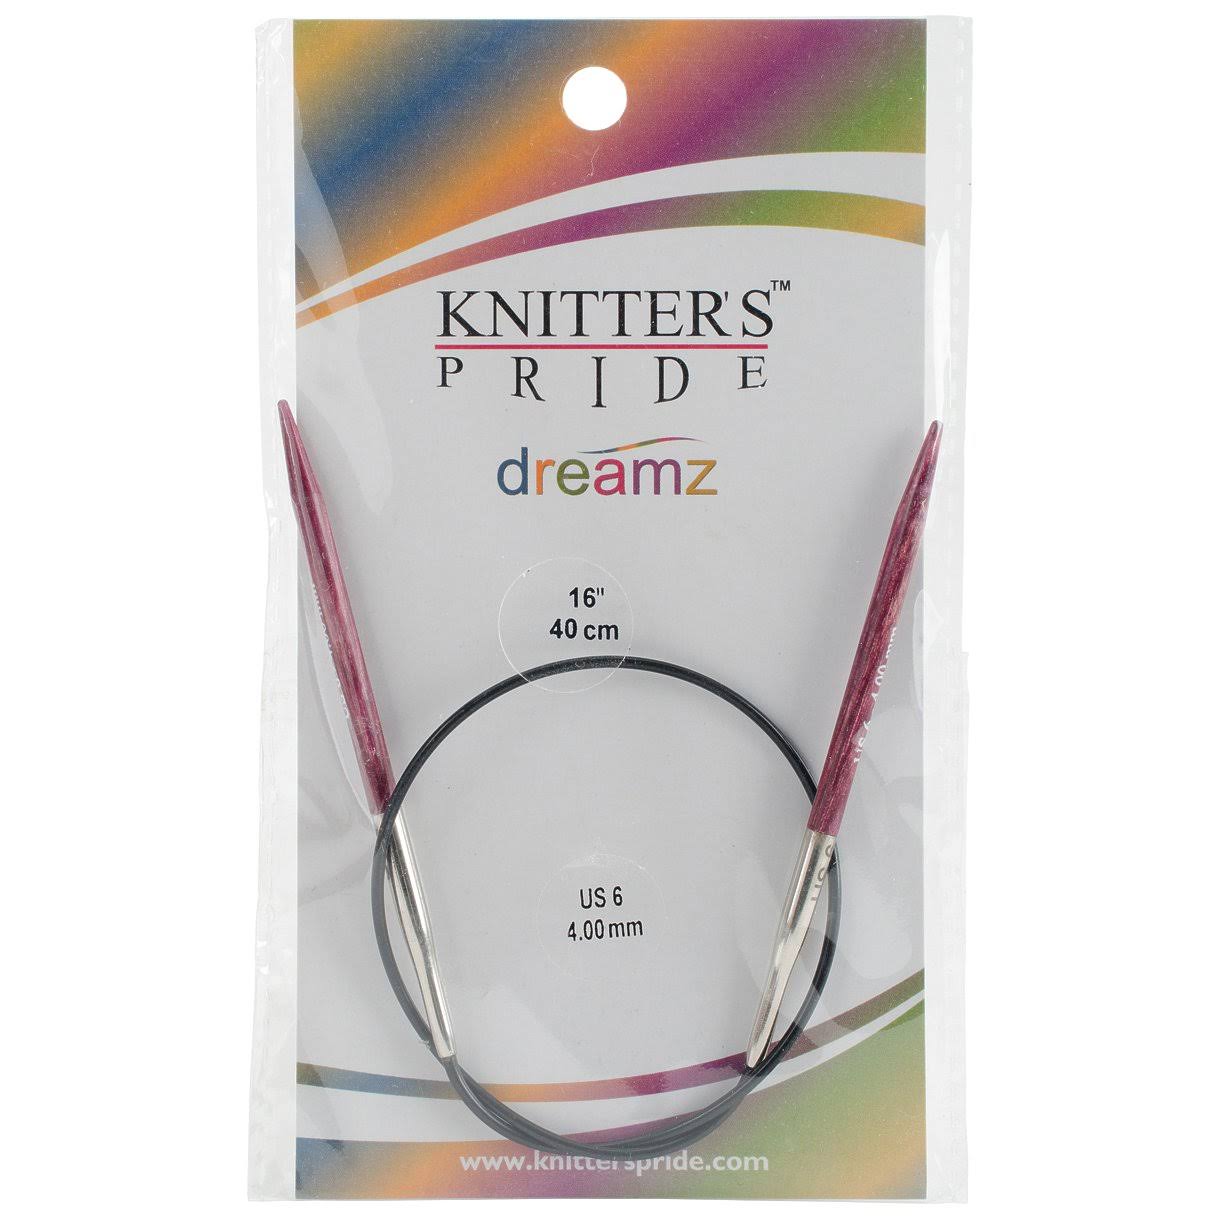 Knitters Pride Dreamz Circular Knitting Needles - Size 6 4mm, 16"